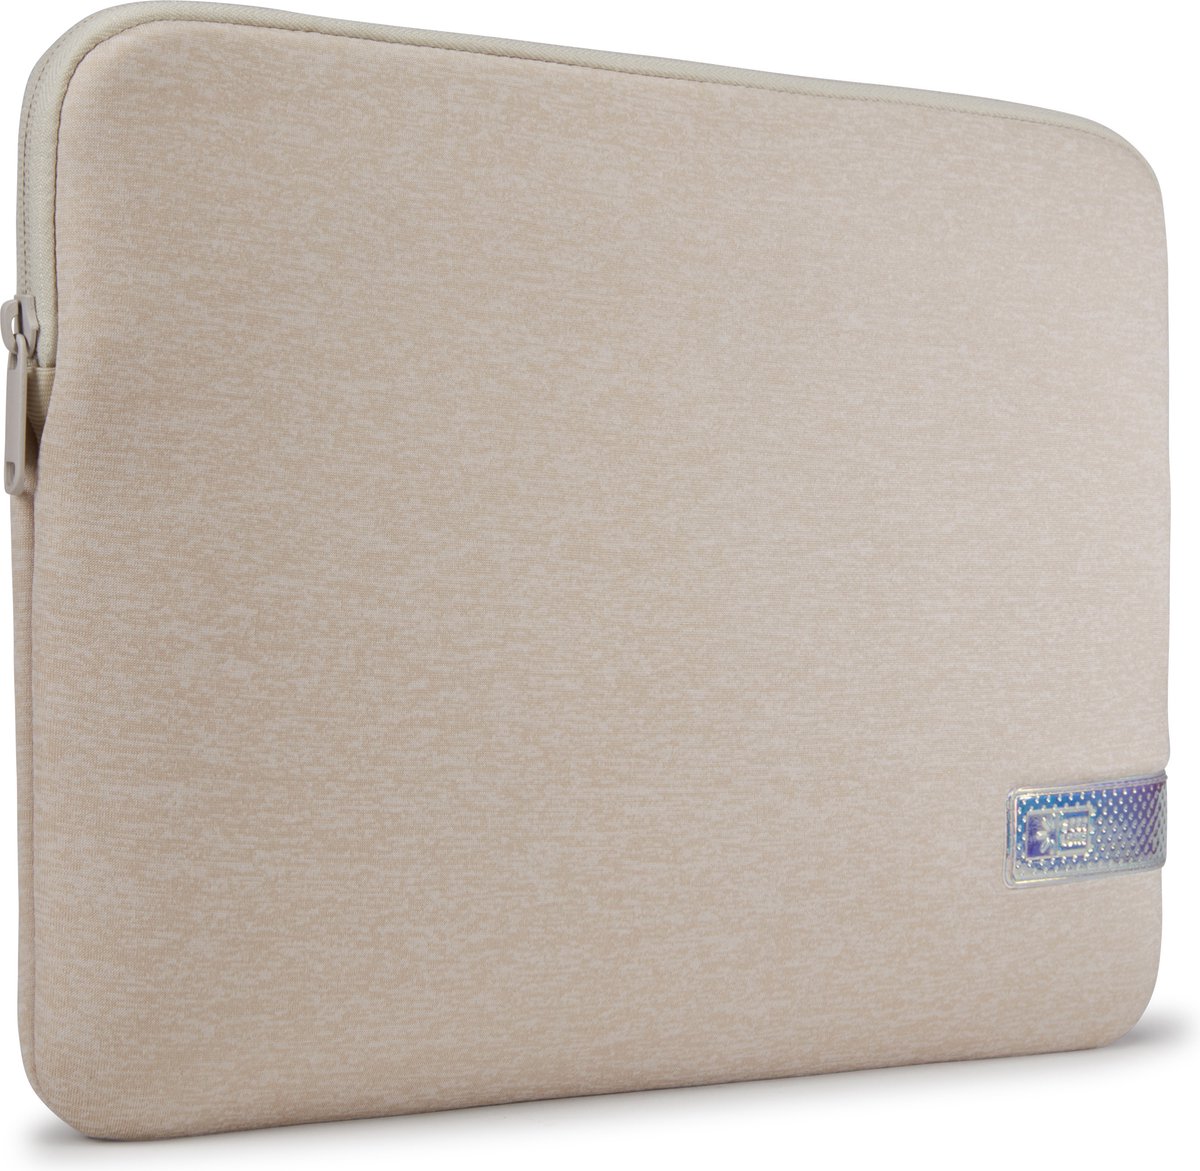 Case Logic Reflect - Laptopsleeve - Macbook Pro - 13 inch - Concrete